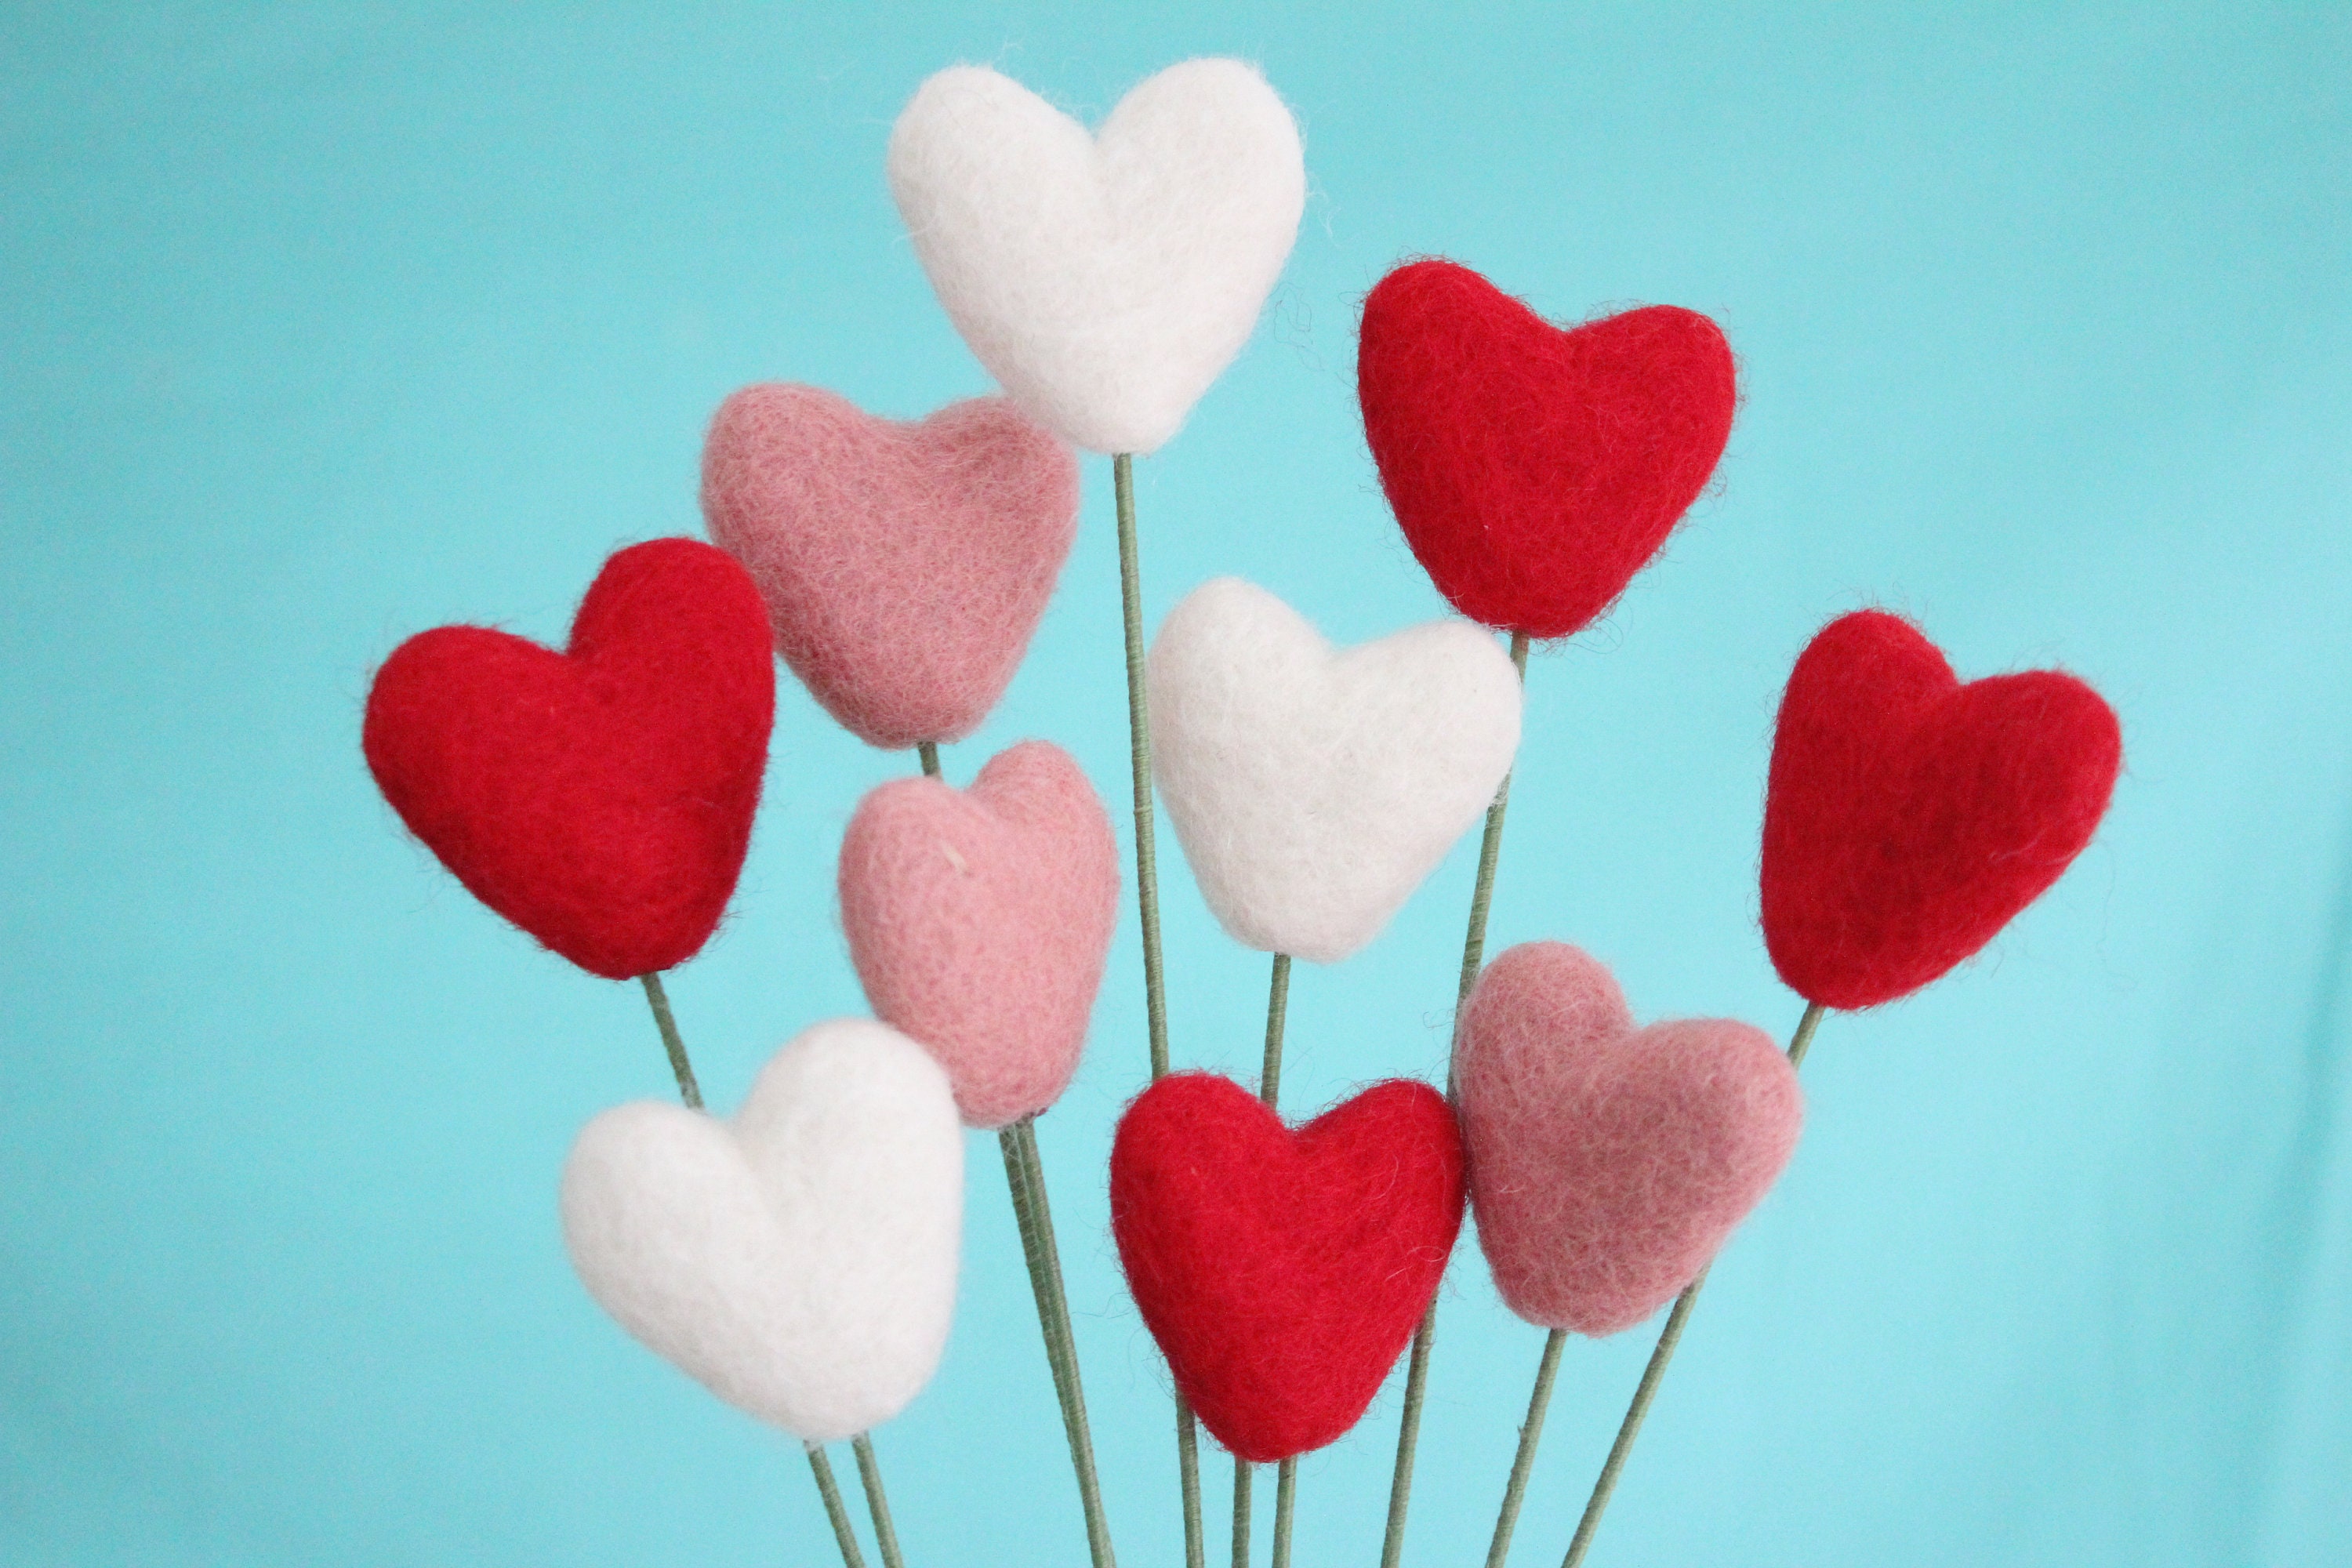 20pcs 4cm Heart Shape Felt Wool Felt Hearts Balls Gift Filling Red Felt Pom  Poms Wool Felt Balls Felt Balls for Crafts Valentine's Day Mother's Day